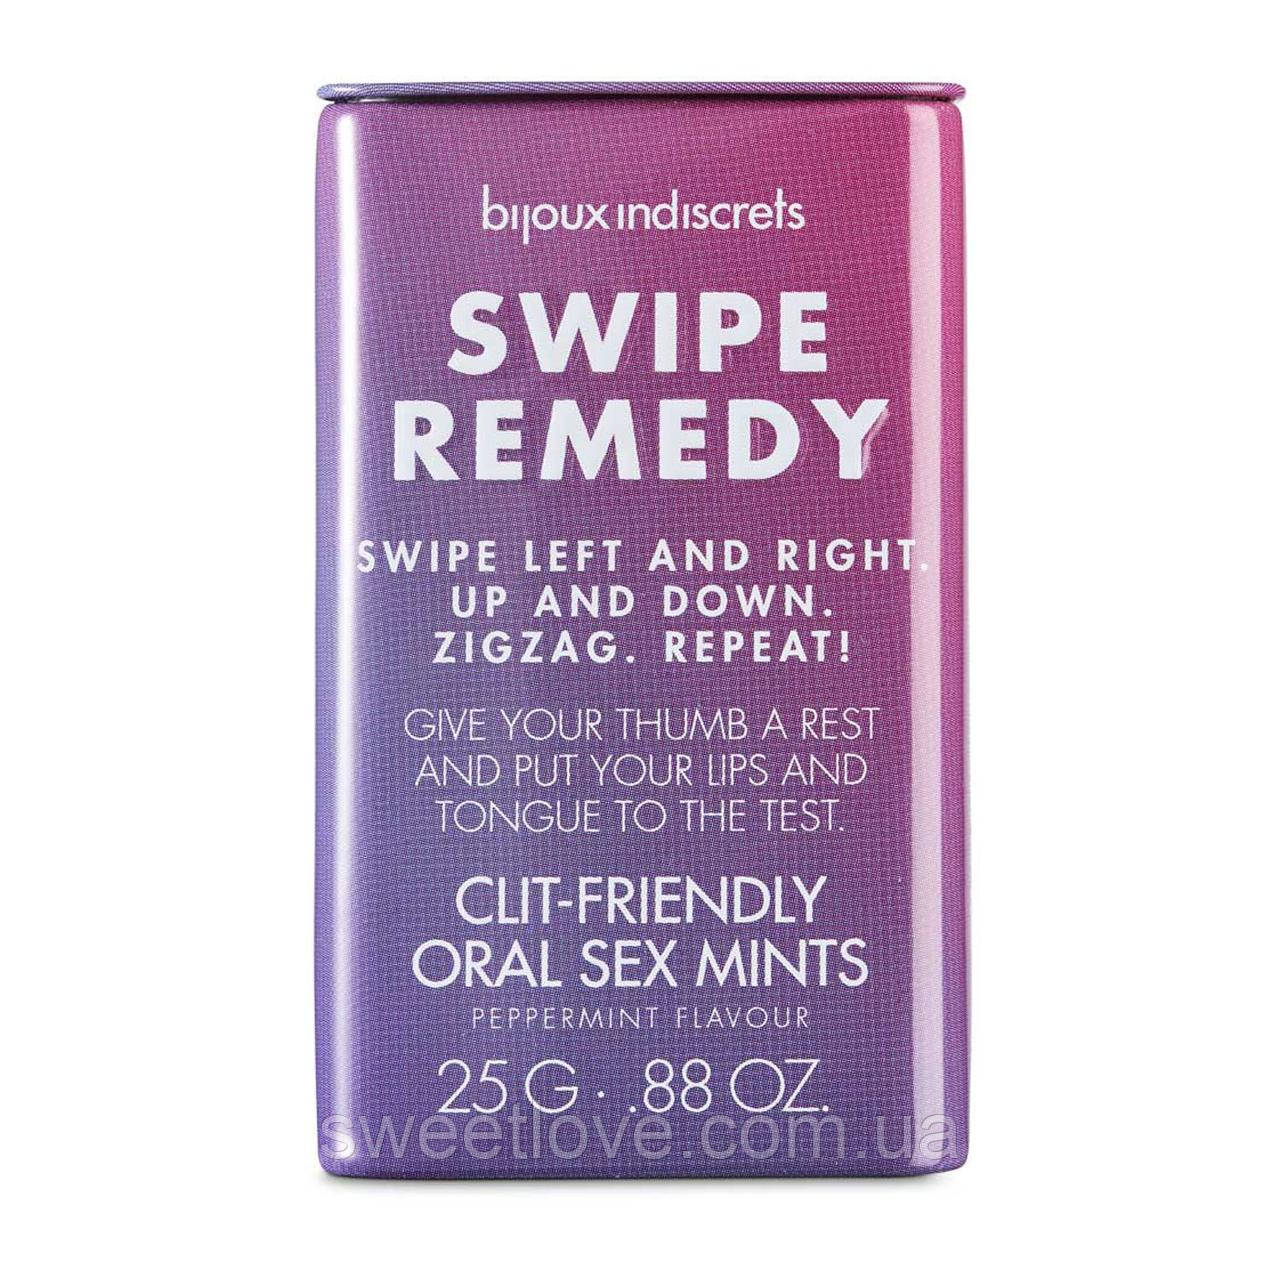 М'ятні цукерки Bijoux Indiscrets Swipe Remedy — clitherapy oral sex mints, без цукру, термін 31.08.23